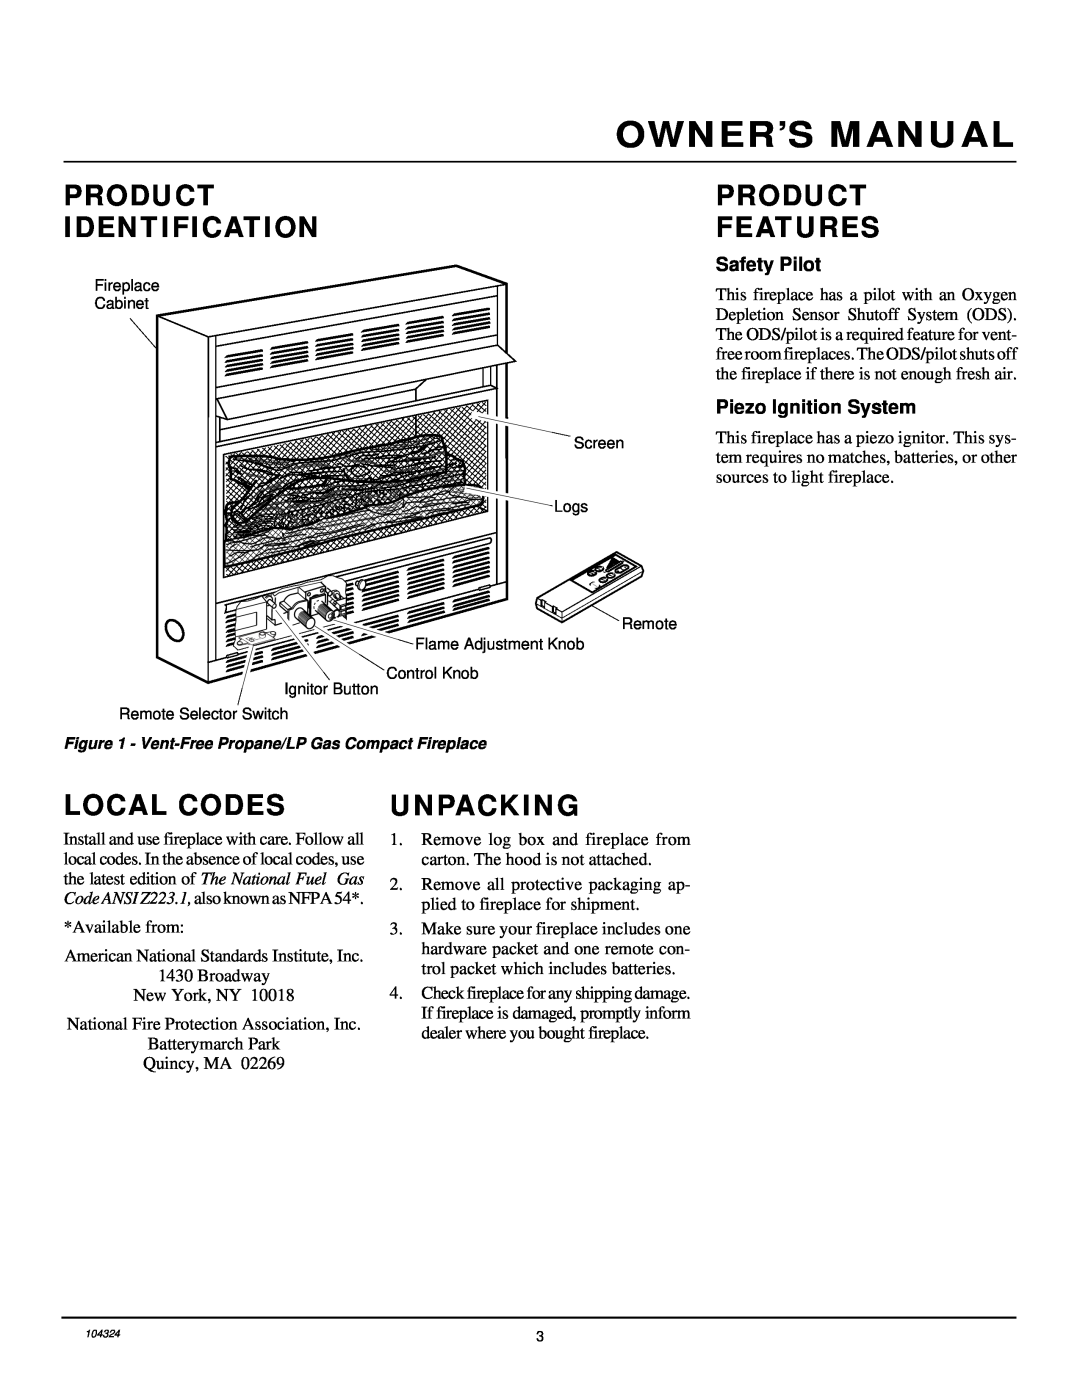 Desa GCF26PR installation manual Product Identification, Product Features, Local Codes, Unpacking 